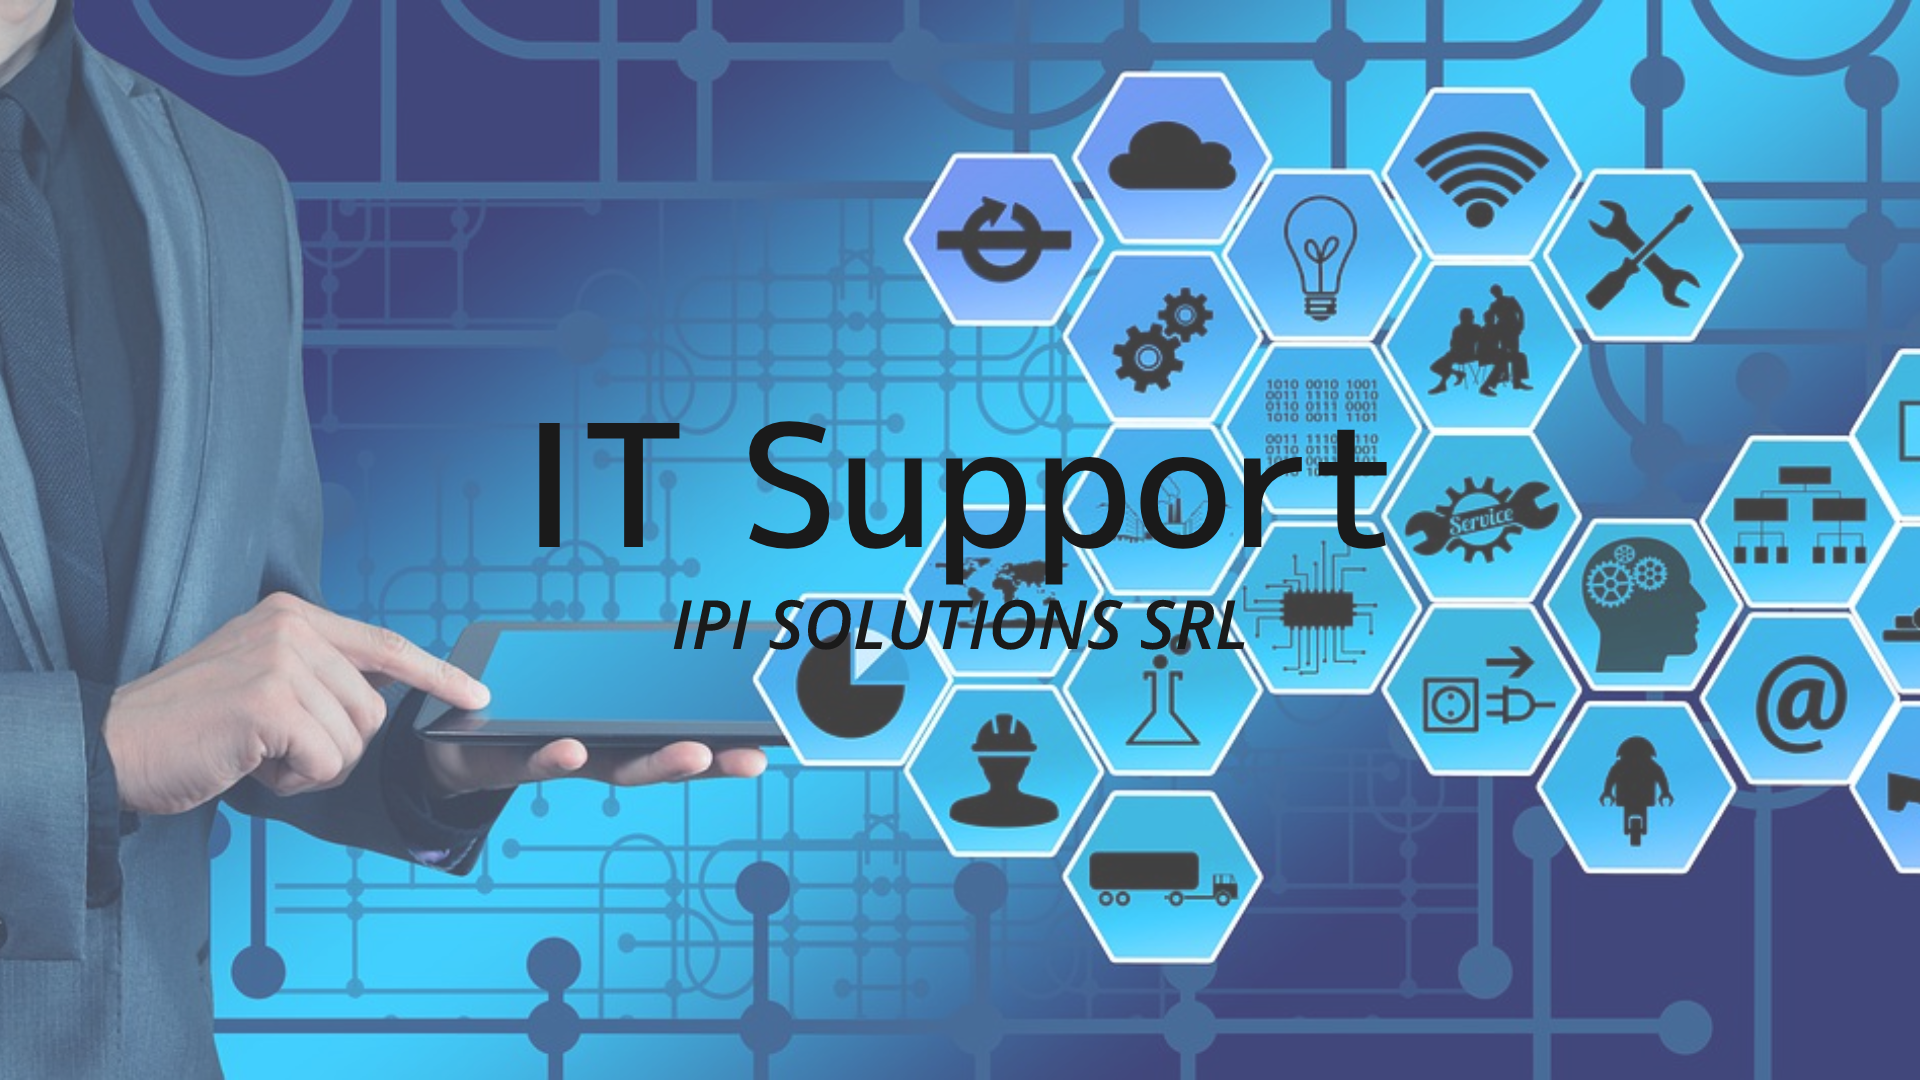 Externalizare IT Support | Compania IPI SOLUTIONS SRL